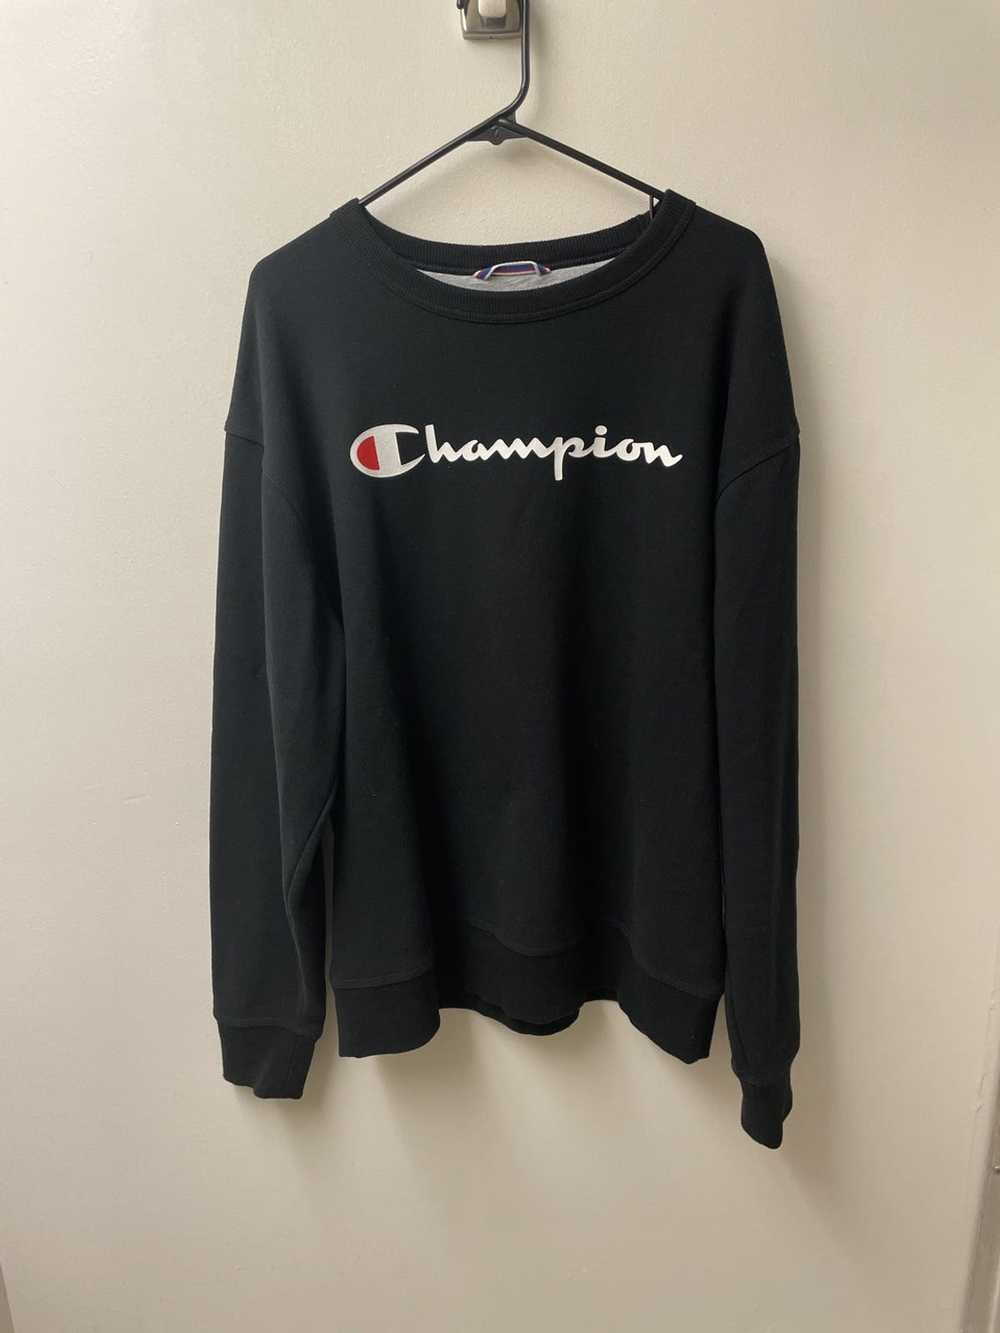 Champion Champion powerblend fleece sweatshirt - image 1